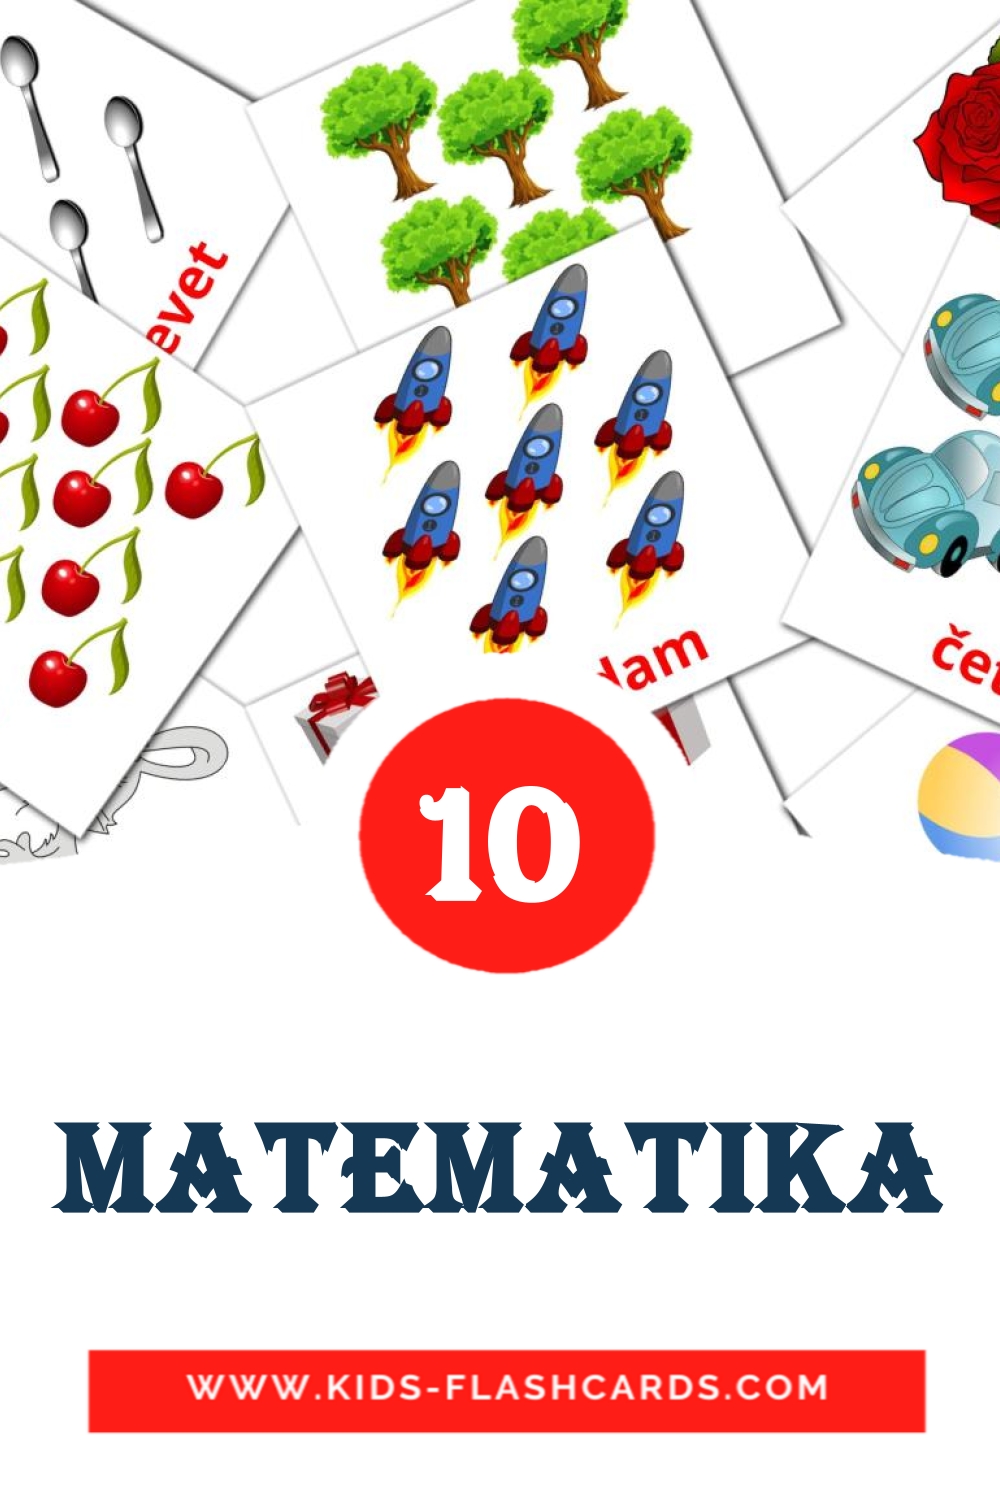 Matematika на боснийском для Детского Сада (10 карточек)